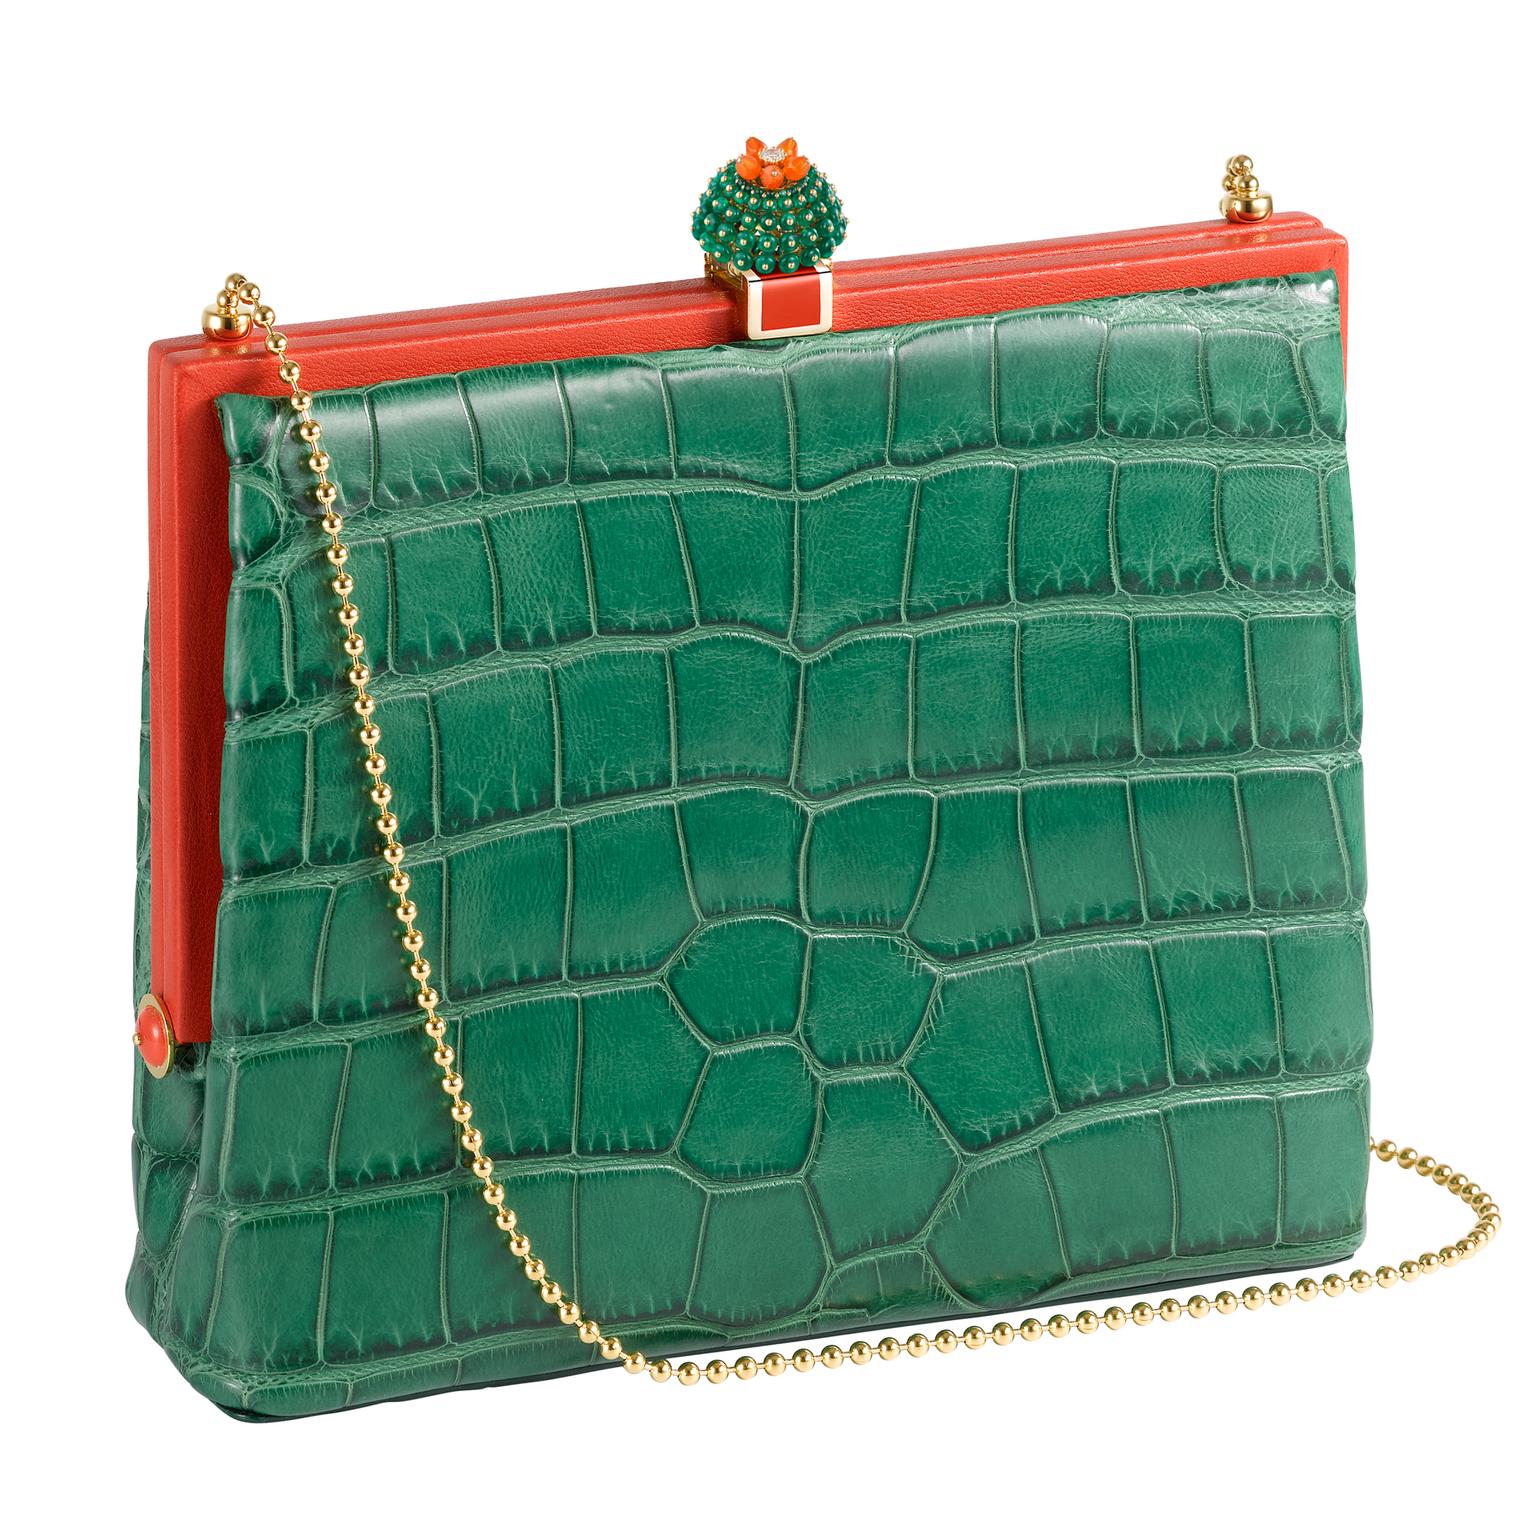 Green alligator Cactus de Cartier handbag